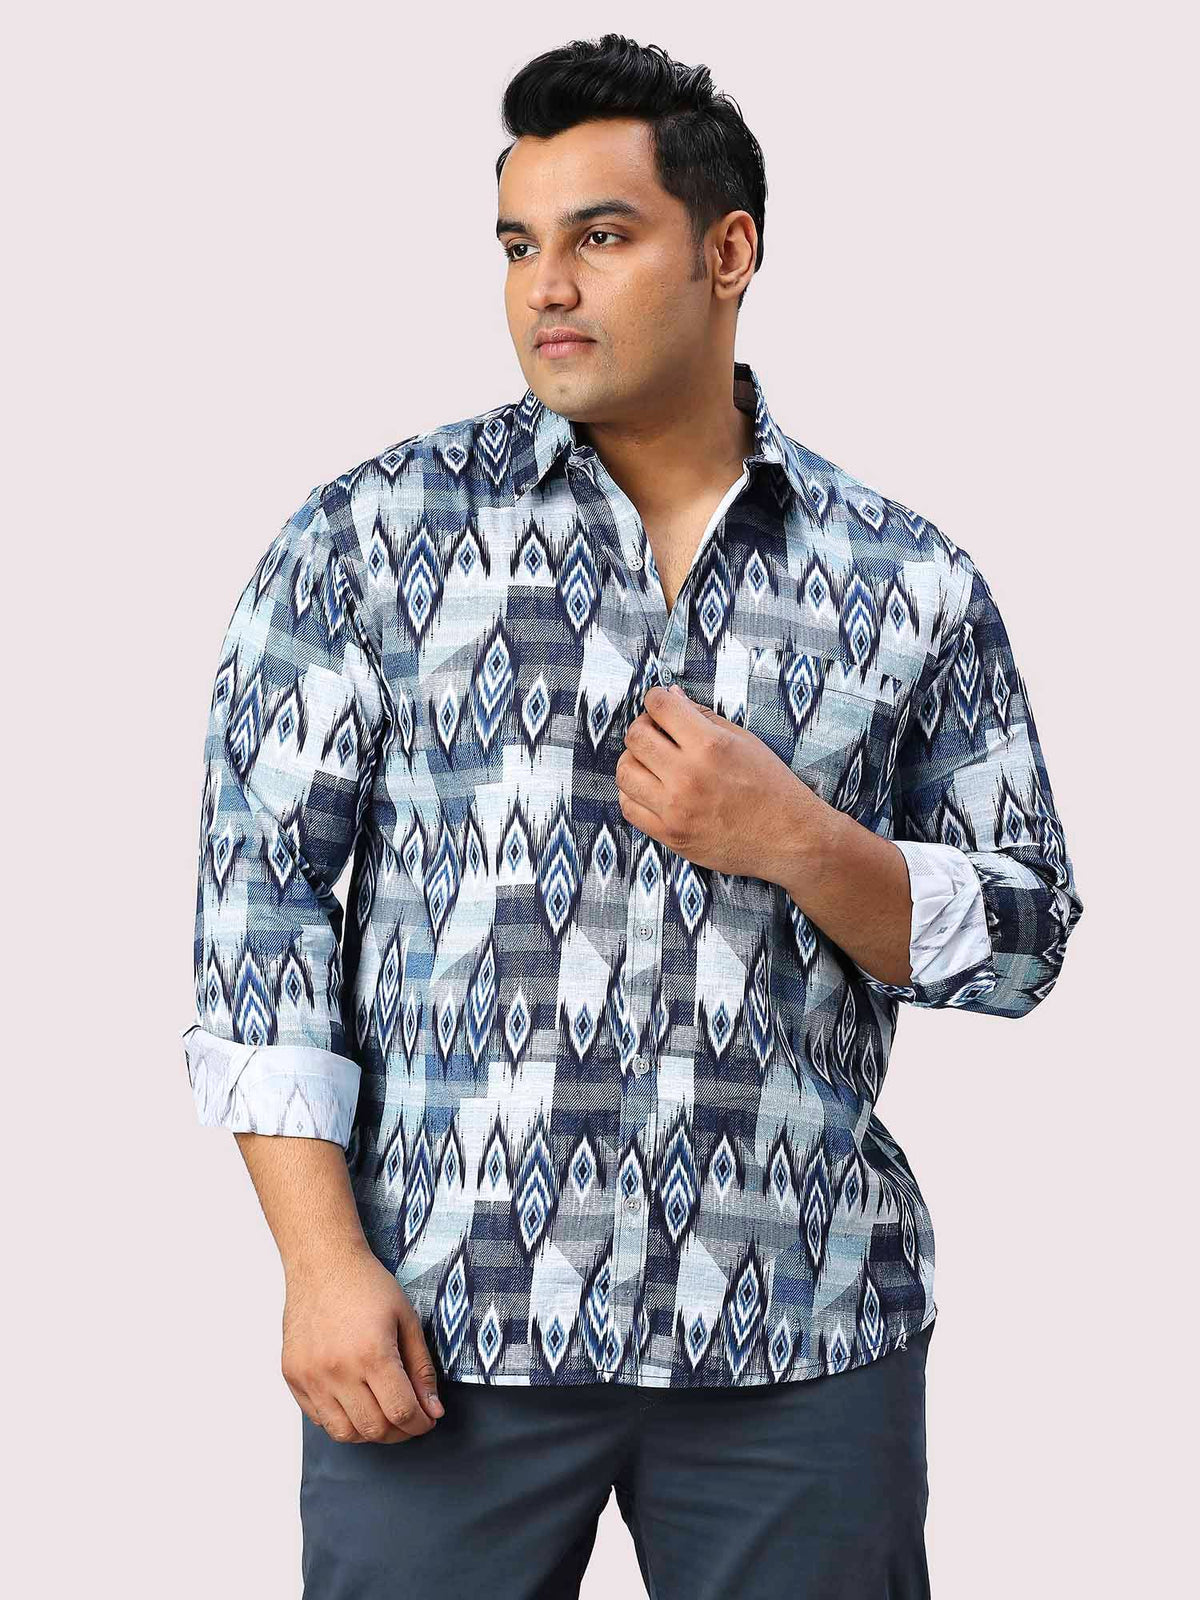 Nile Blue Digital Printed Full Sleeve Shirt Men's Plus Size - Guniaa Fashions